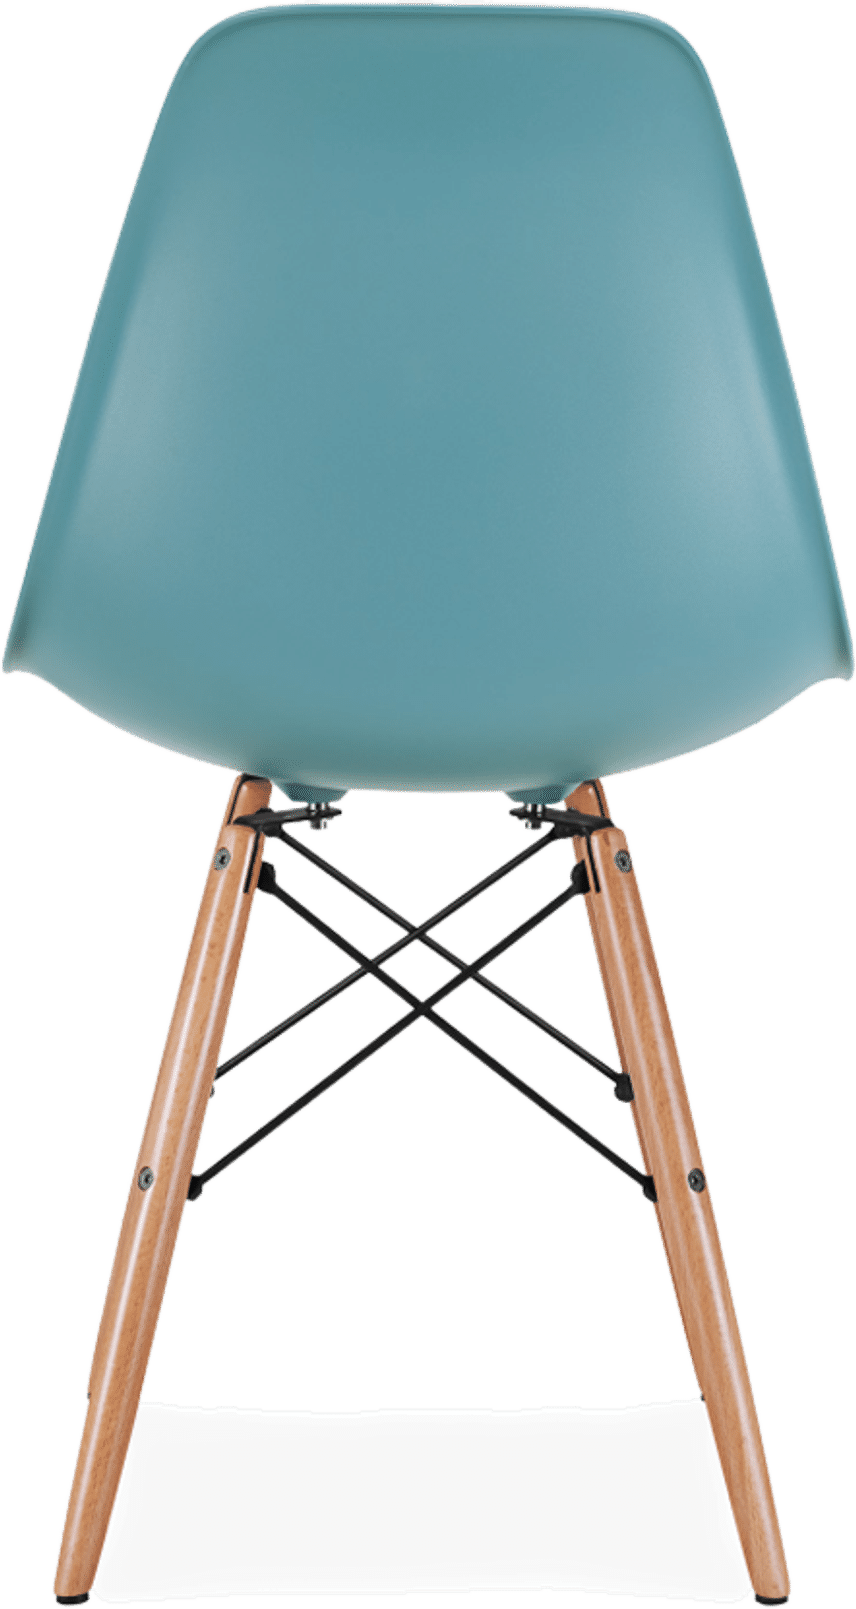 DSW-stoel Teal/Light Wood image.